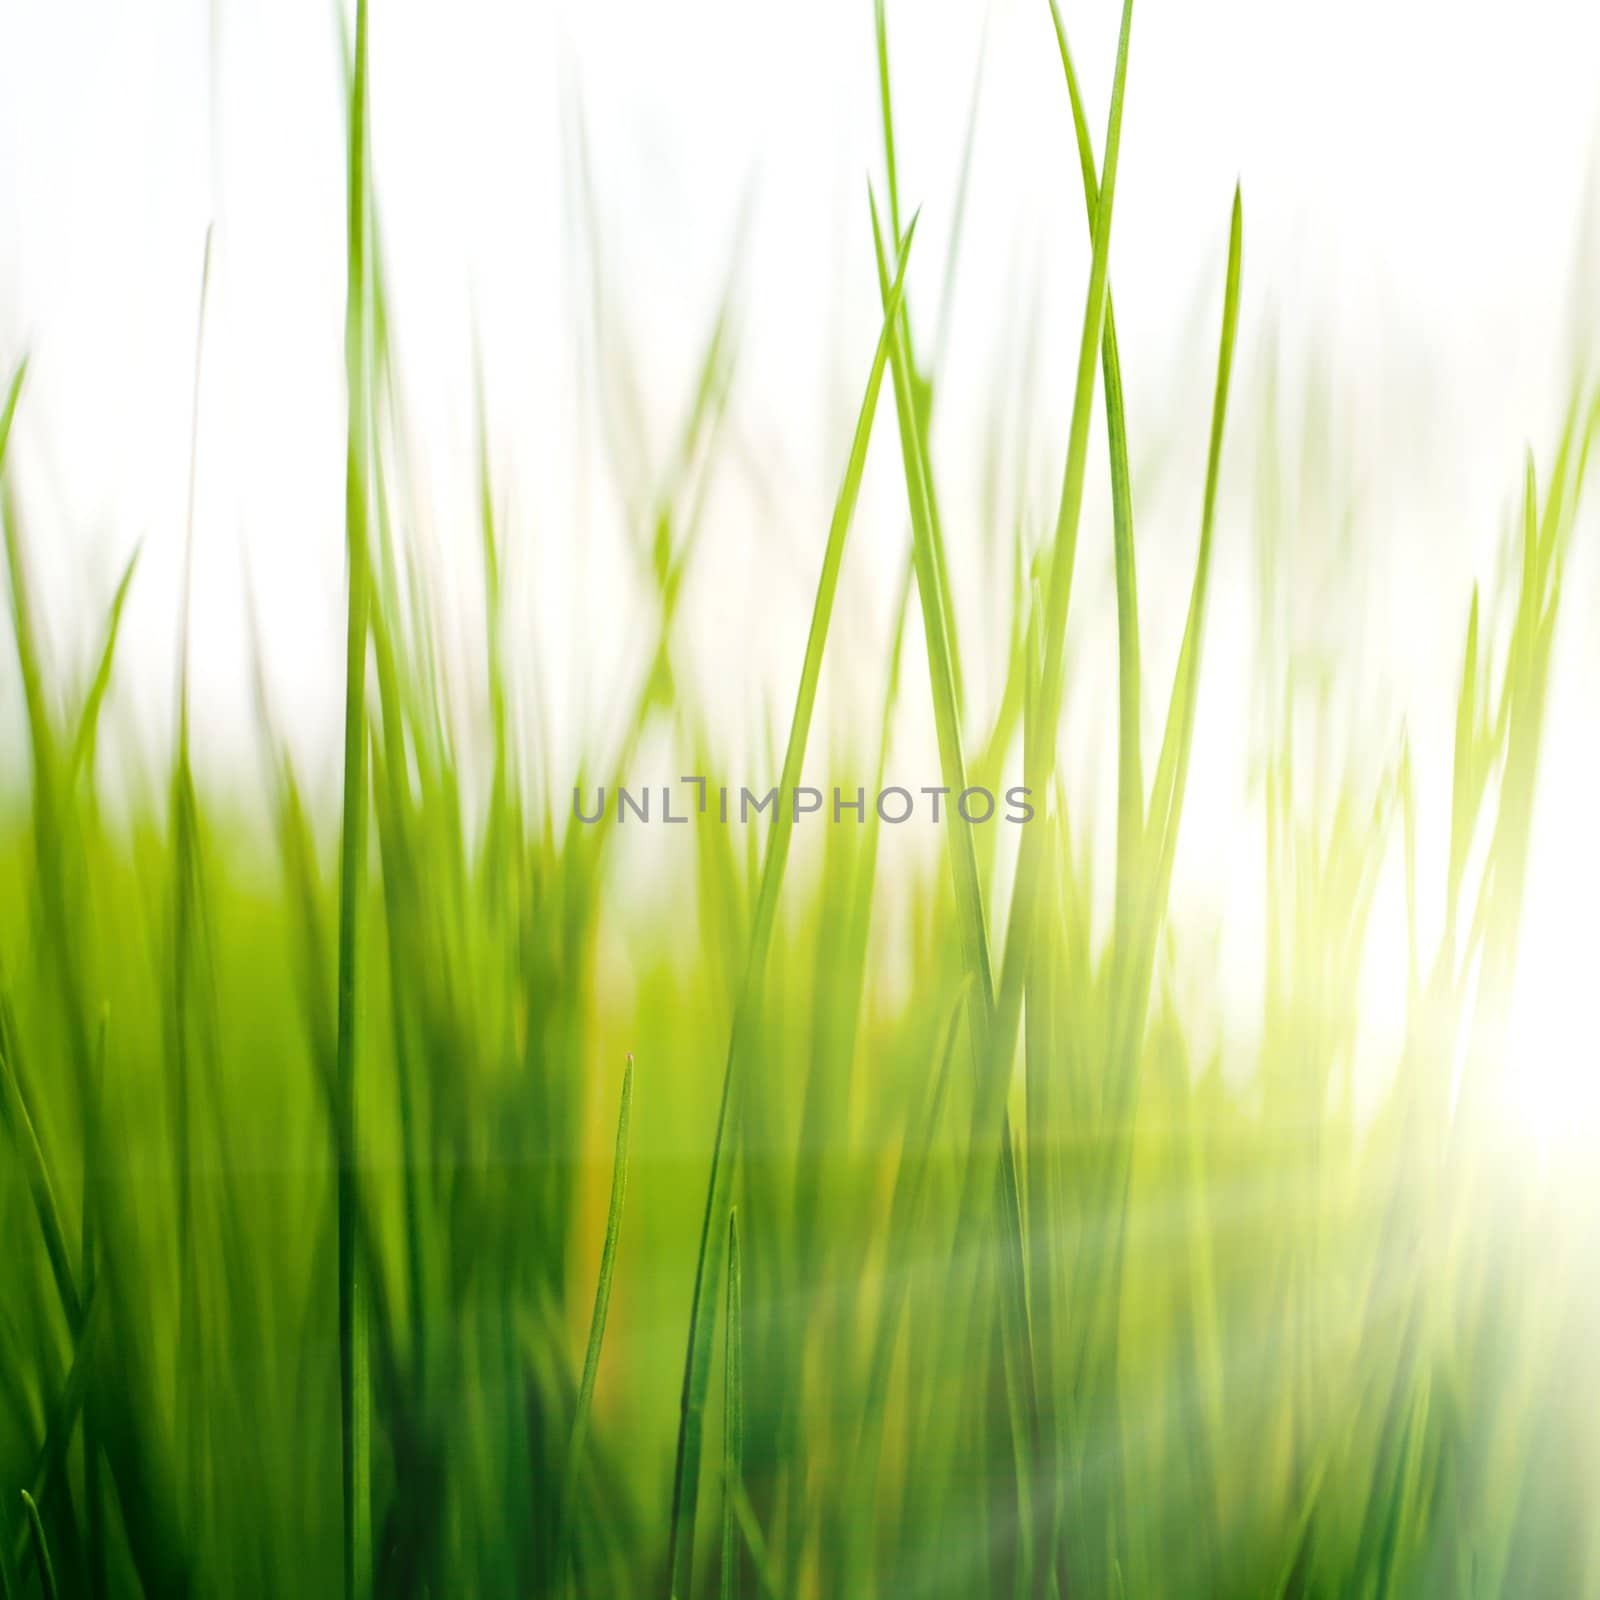 An image of green grass and sunlight